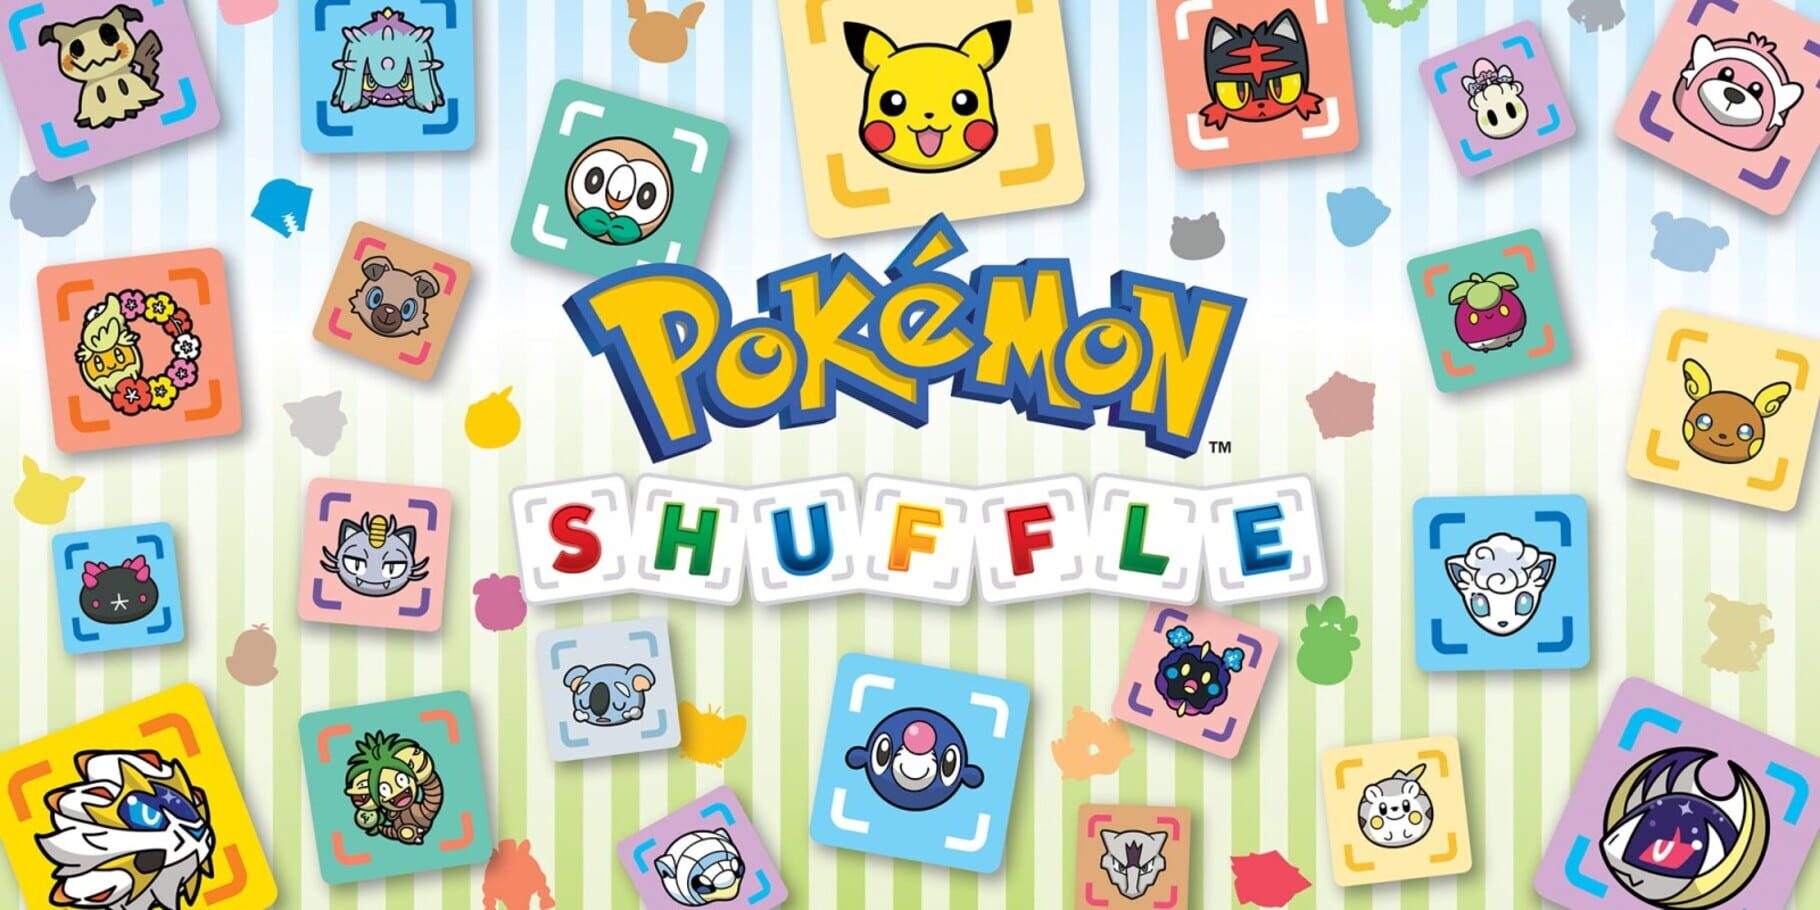 Arte - Pokémon Shuffle